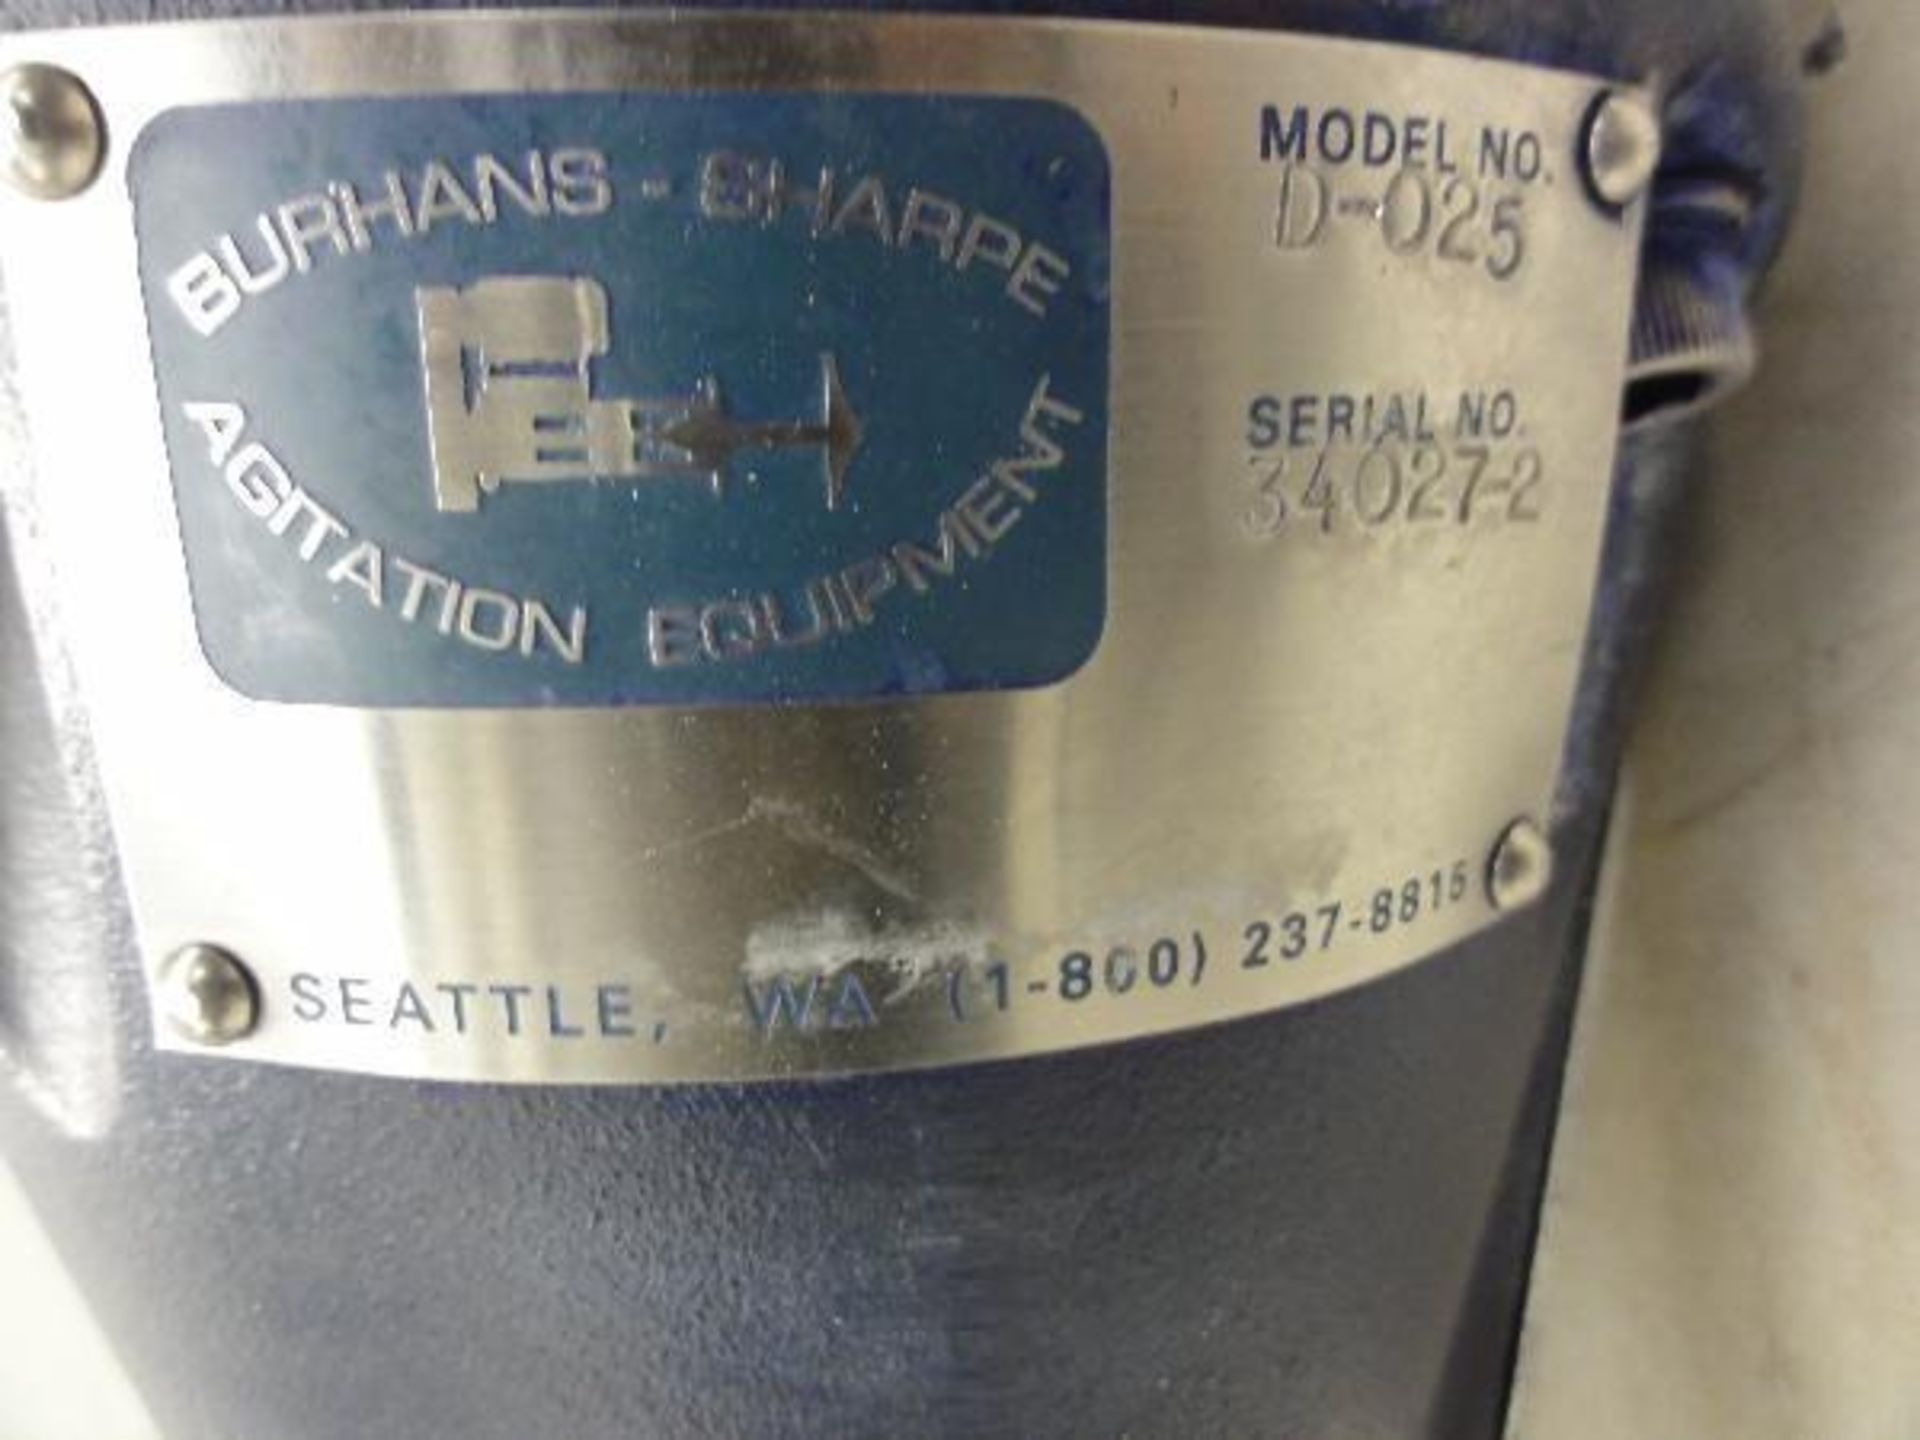 Burhans-Sharpe Model D-025 Mixer Agitator Stirrer Unit, Serial No. 34027-2, GE Motor, 1/2 H.P., - Image 9 of 11